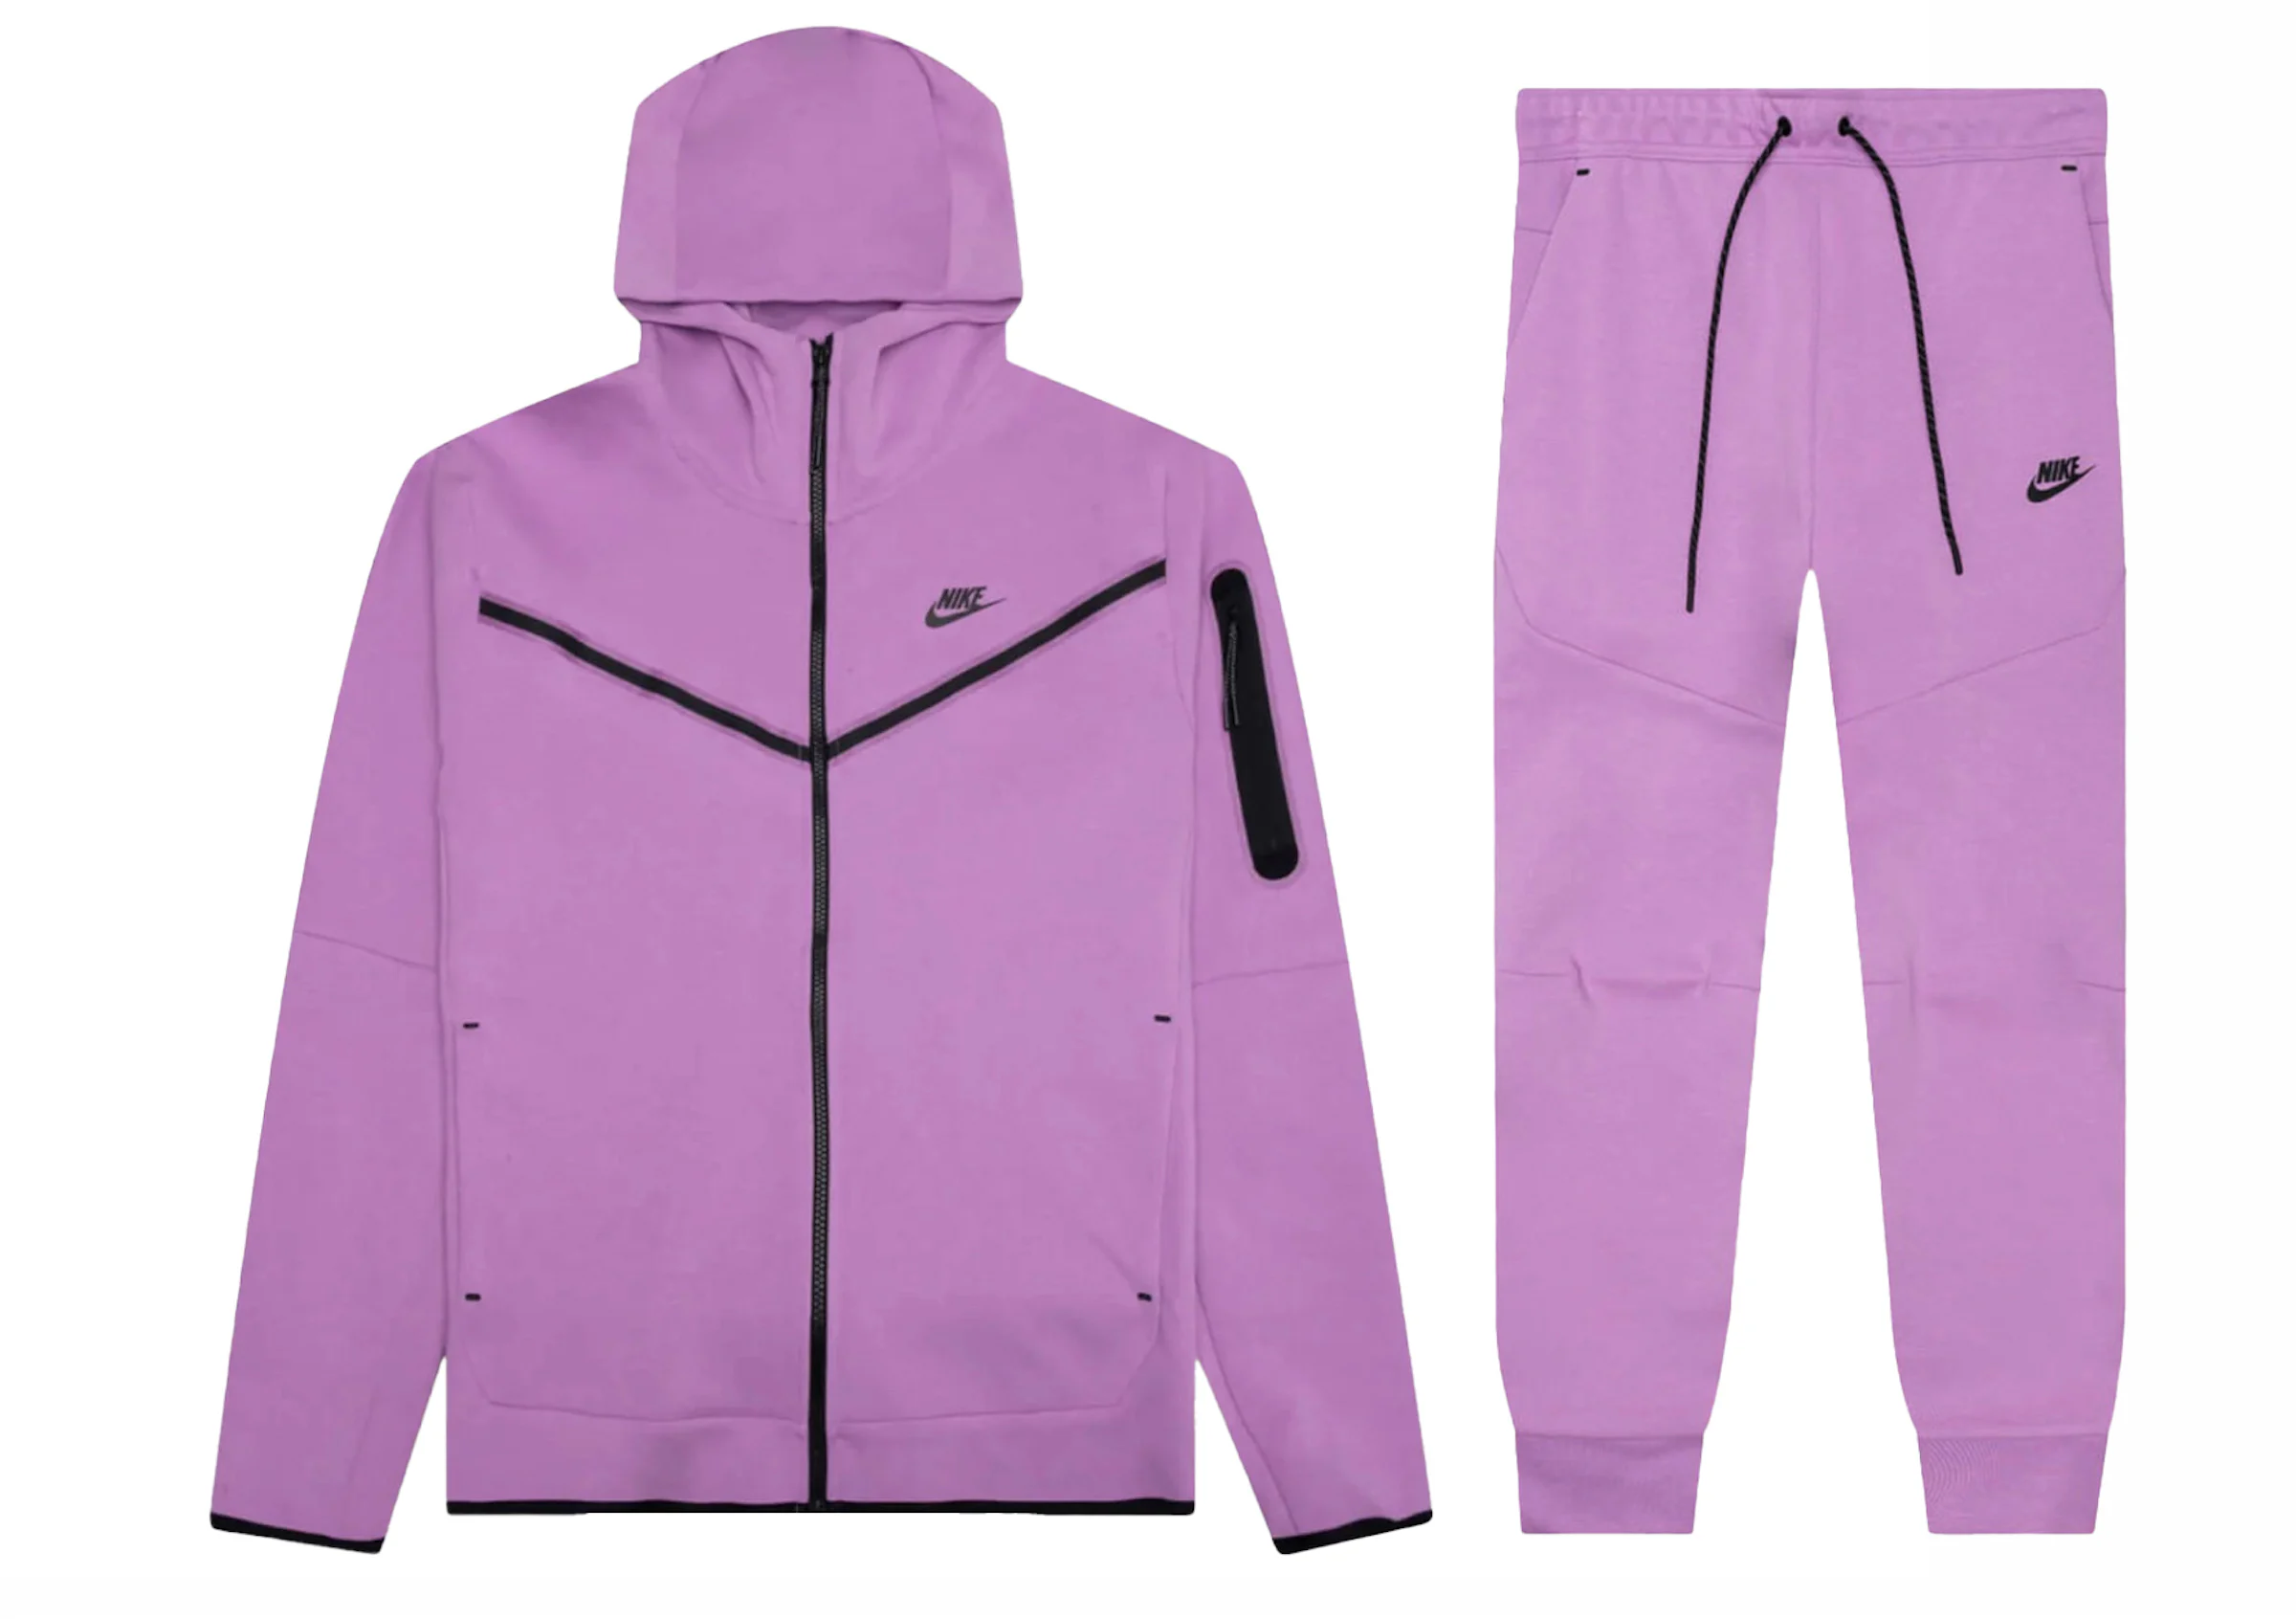 https://images.stockx.com/images/Nike-Sportswear-Tech-Fleece-Full-Zip-Hoodie-Violet-Shock-Black-v4.jpg?fit=fill&bg=FFFFFF&w=1200&h=857&fm=webp&auto=compress&dpr=2&trim=color&updated_at=1701981796&q=60